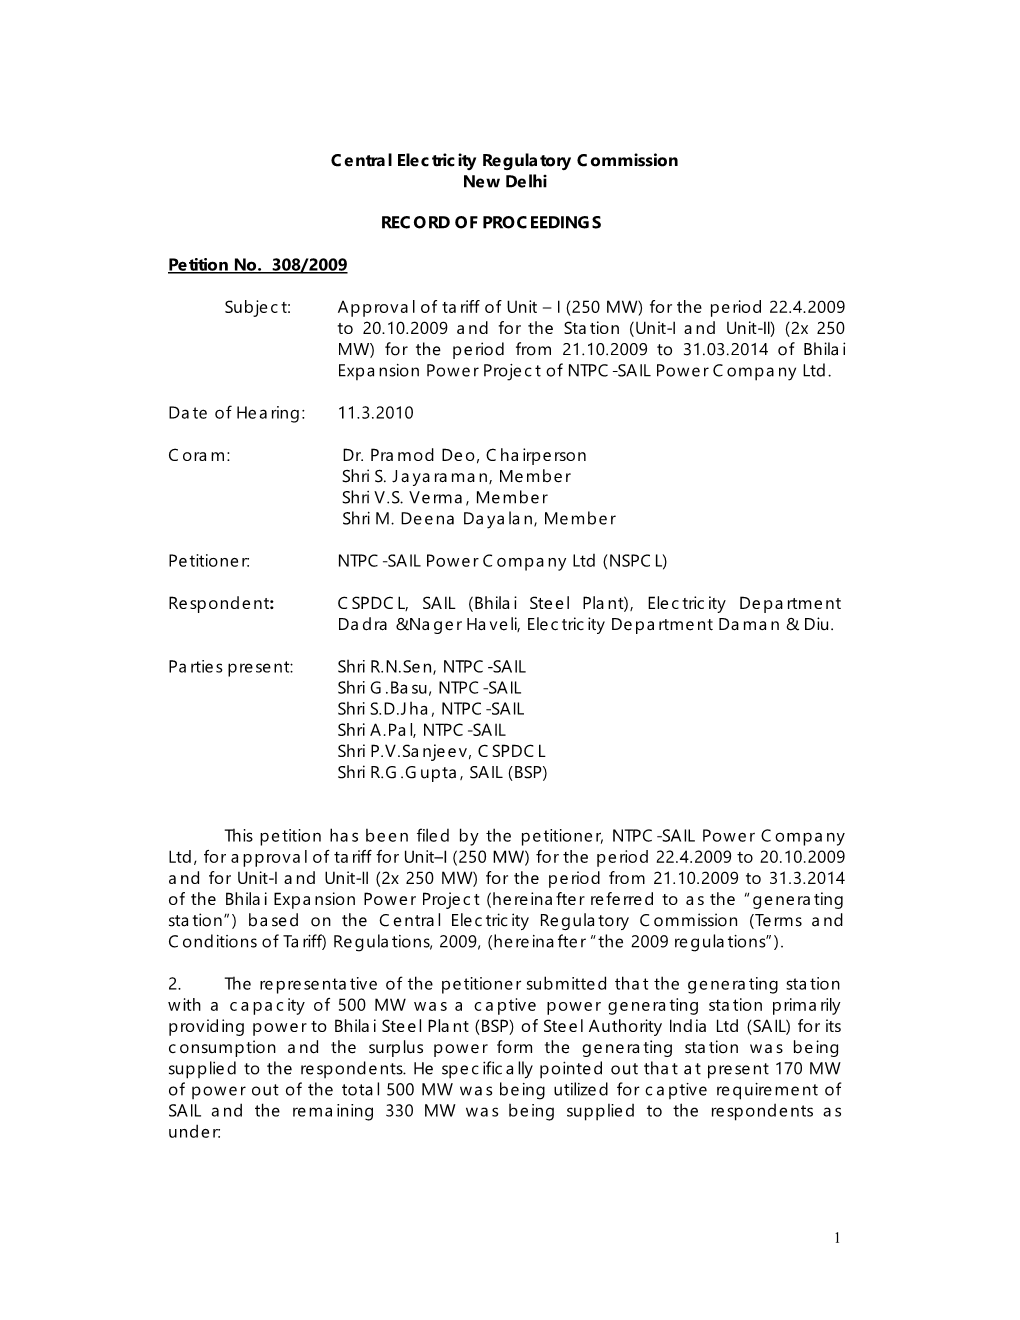 Central Electricity Regulatory Commission New Delhi RECORD